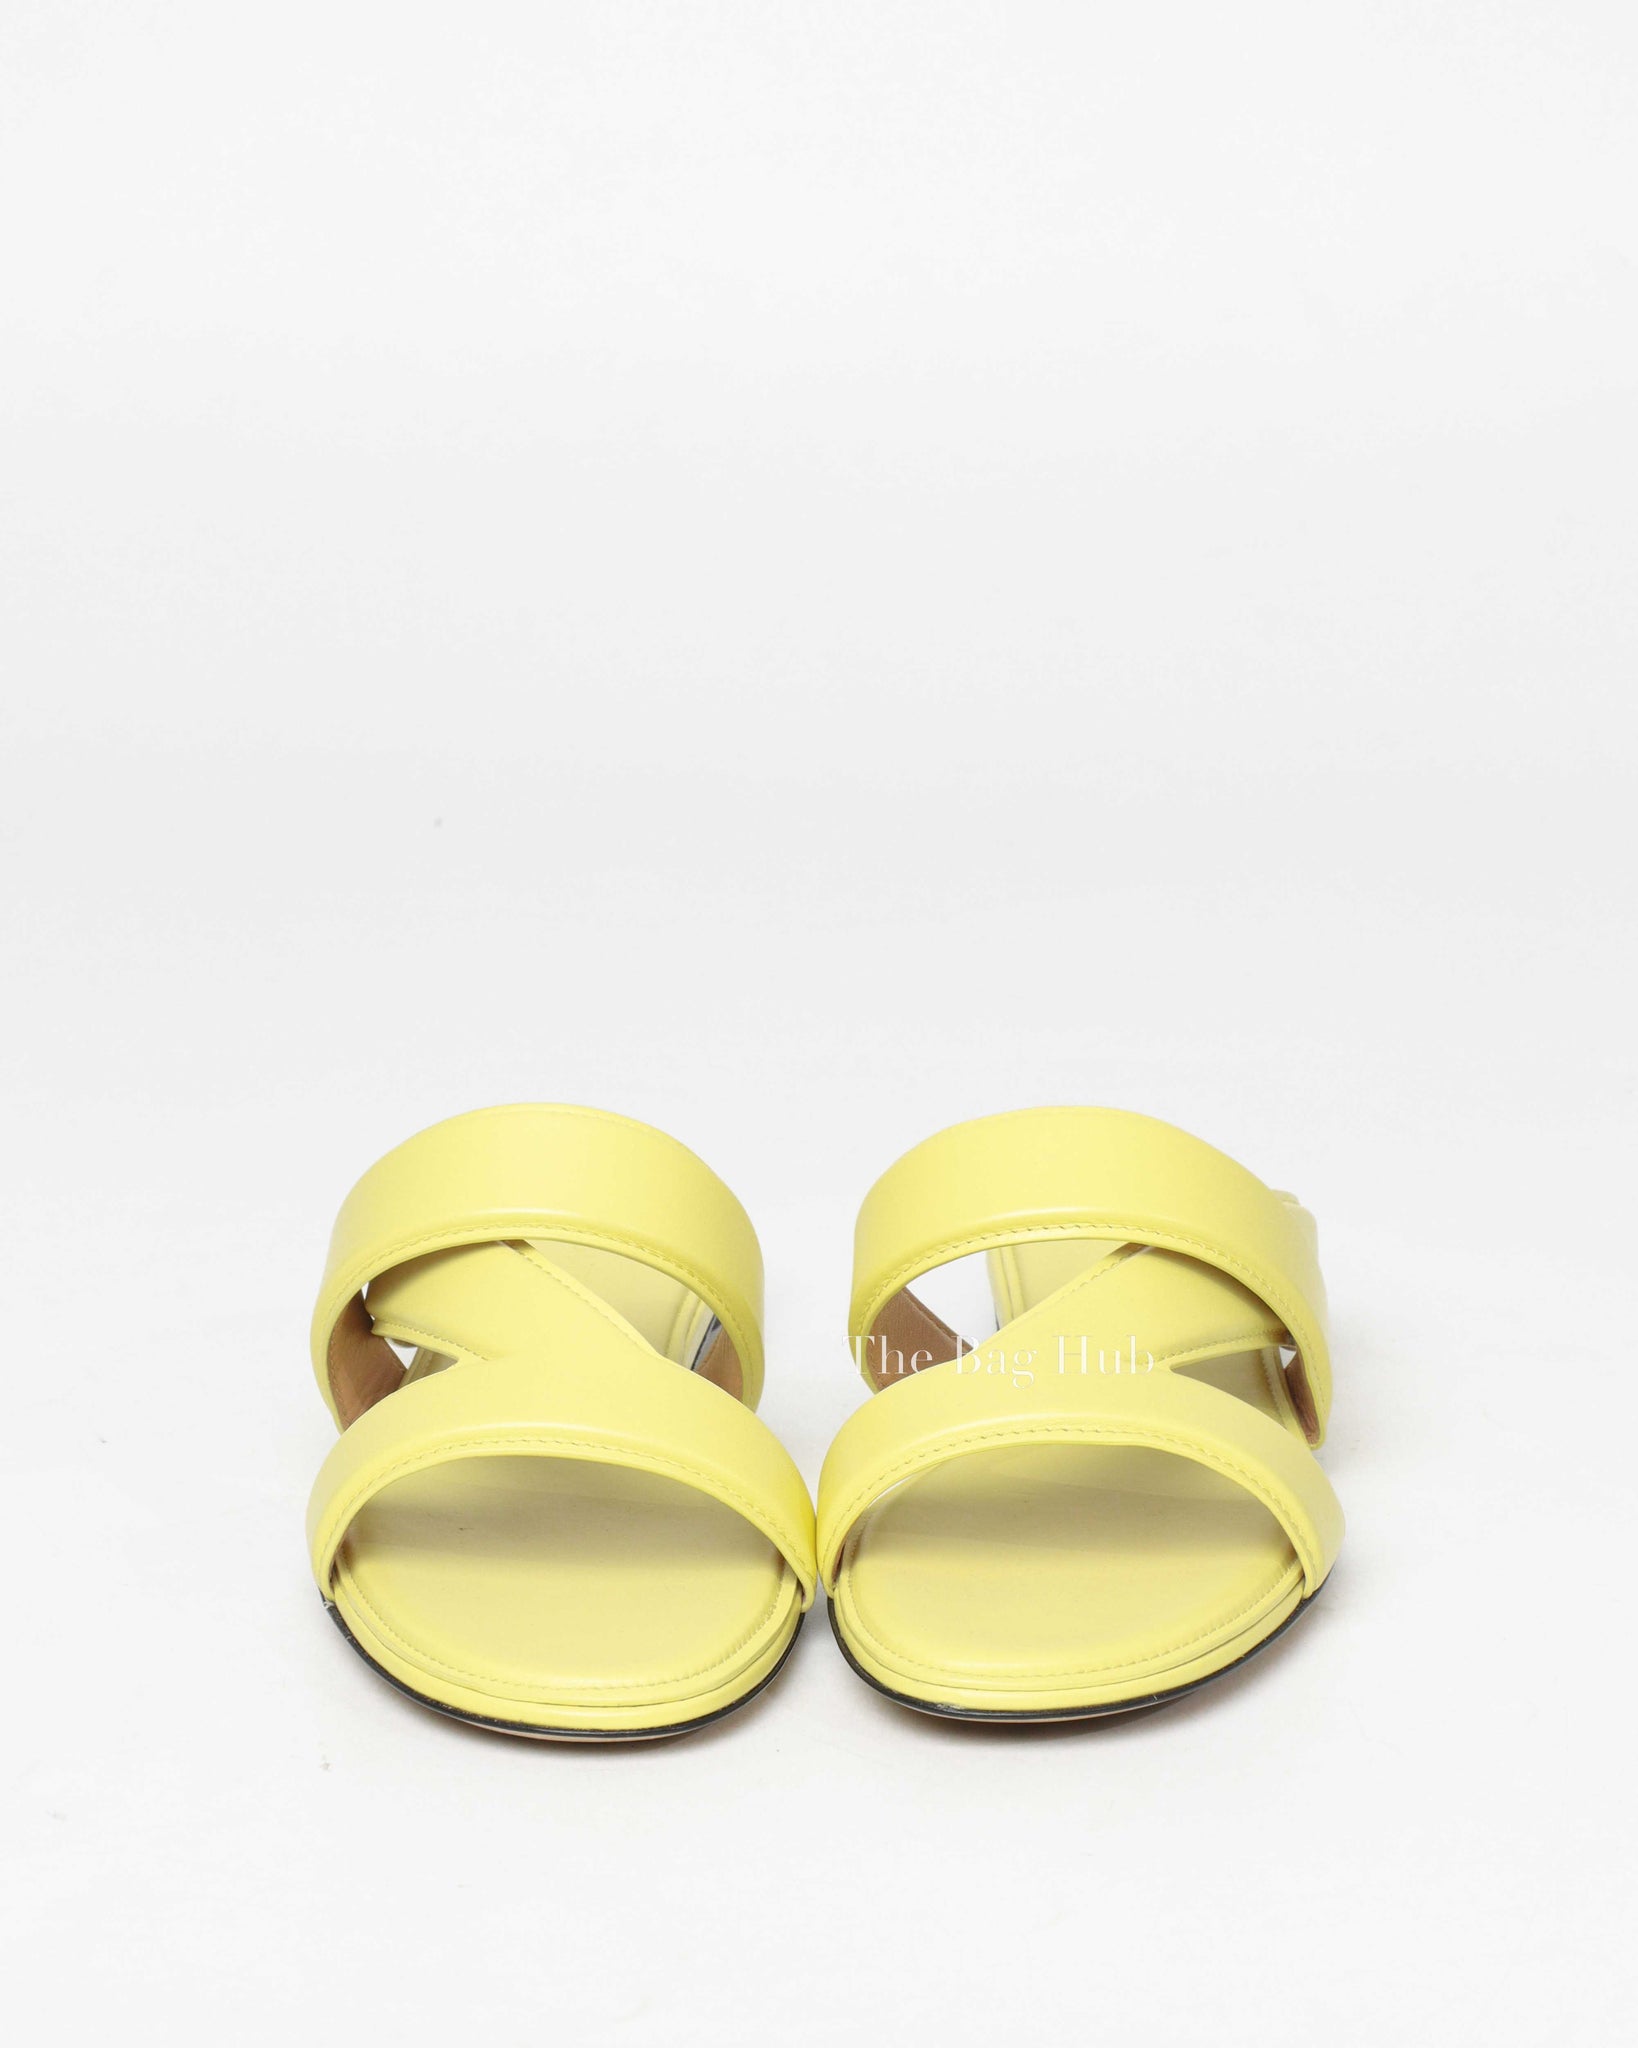 Bottega Veneta Light Yellow Leather Band Flat Sandals Size 38-3